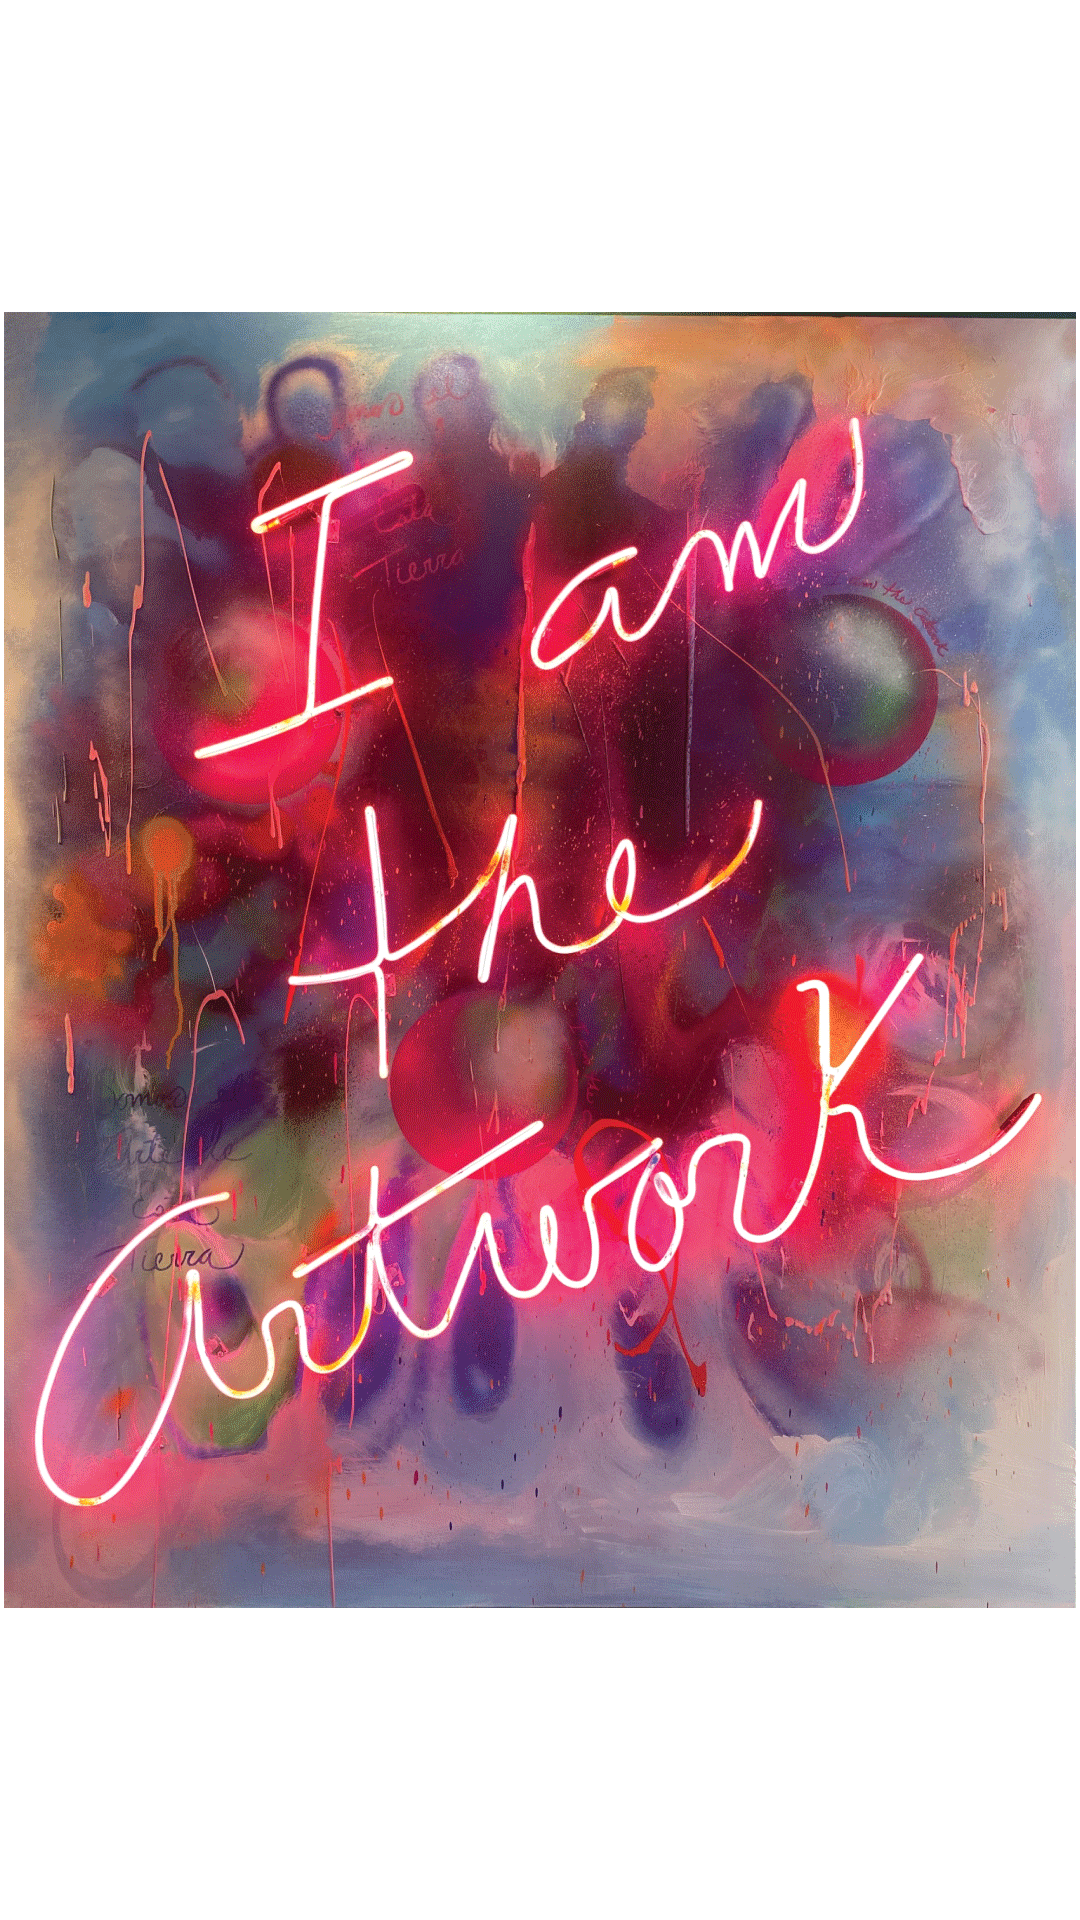 NEON "I AM THE ARTWORK"